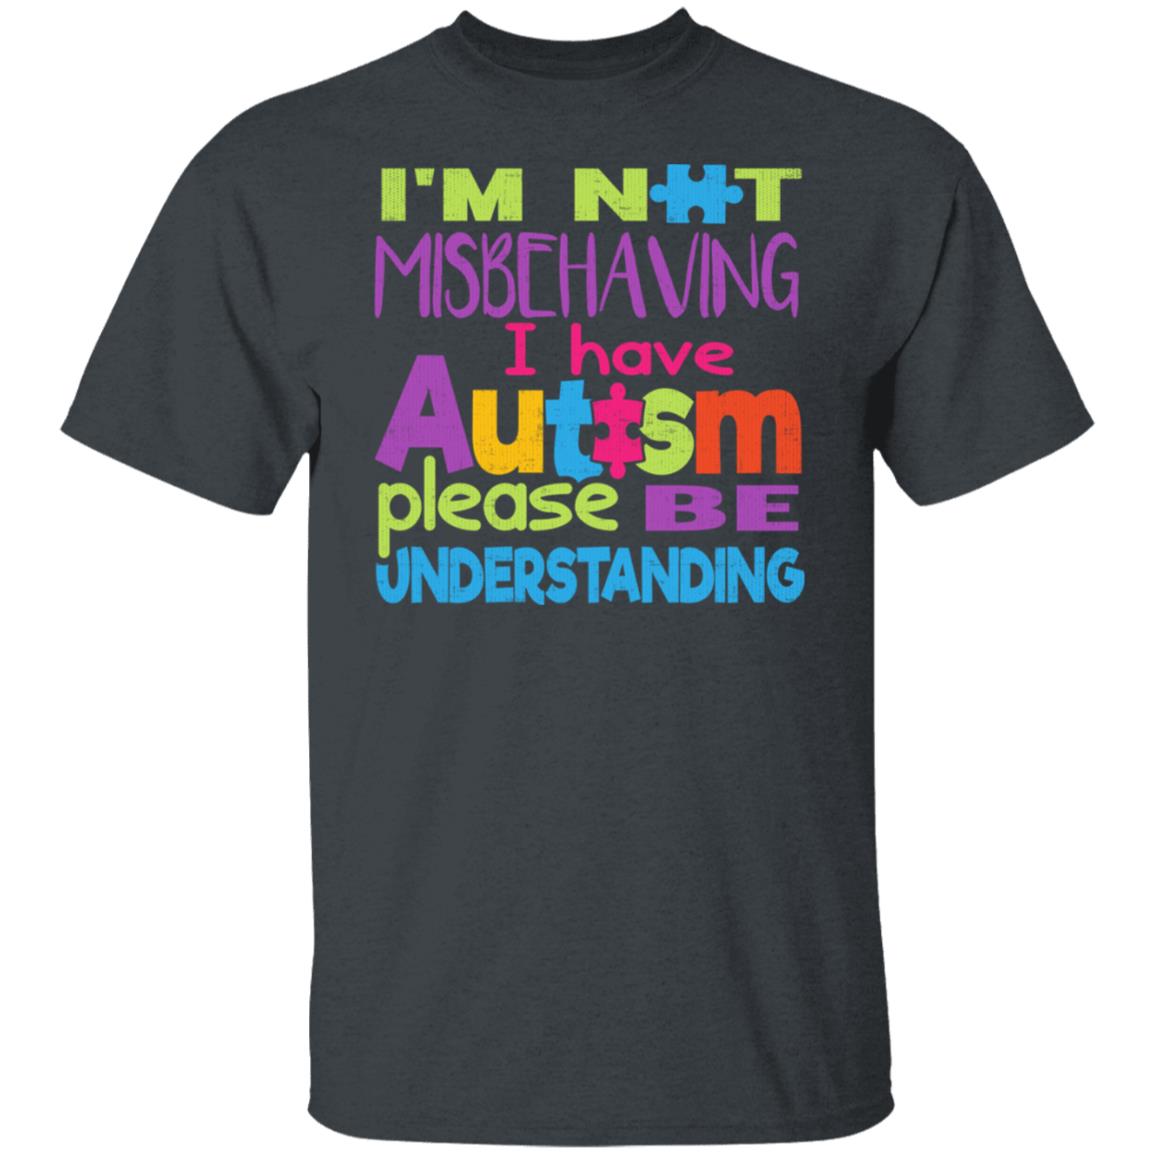 I'm not misbehaving T-shirts - I have autism tee shirt